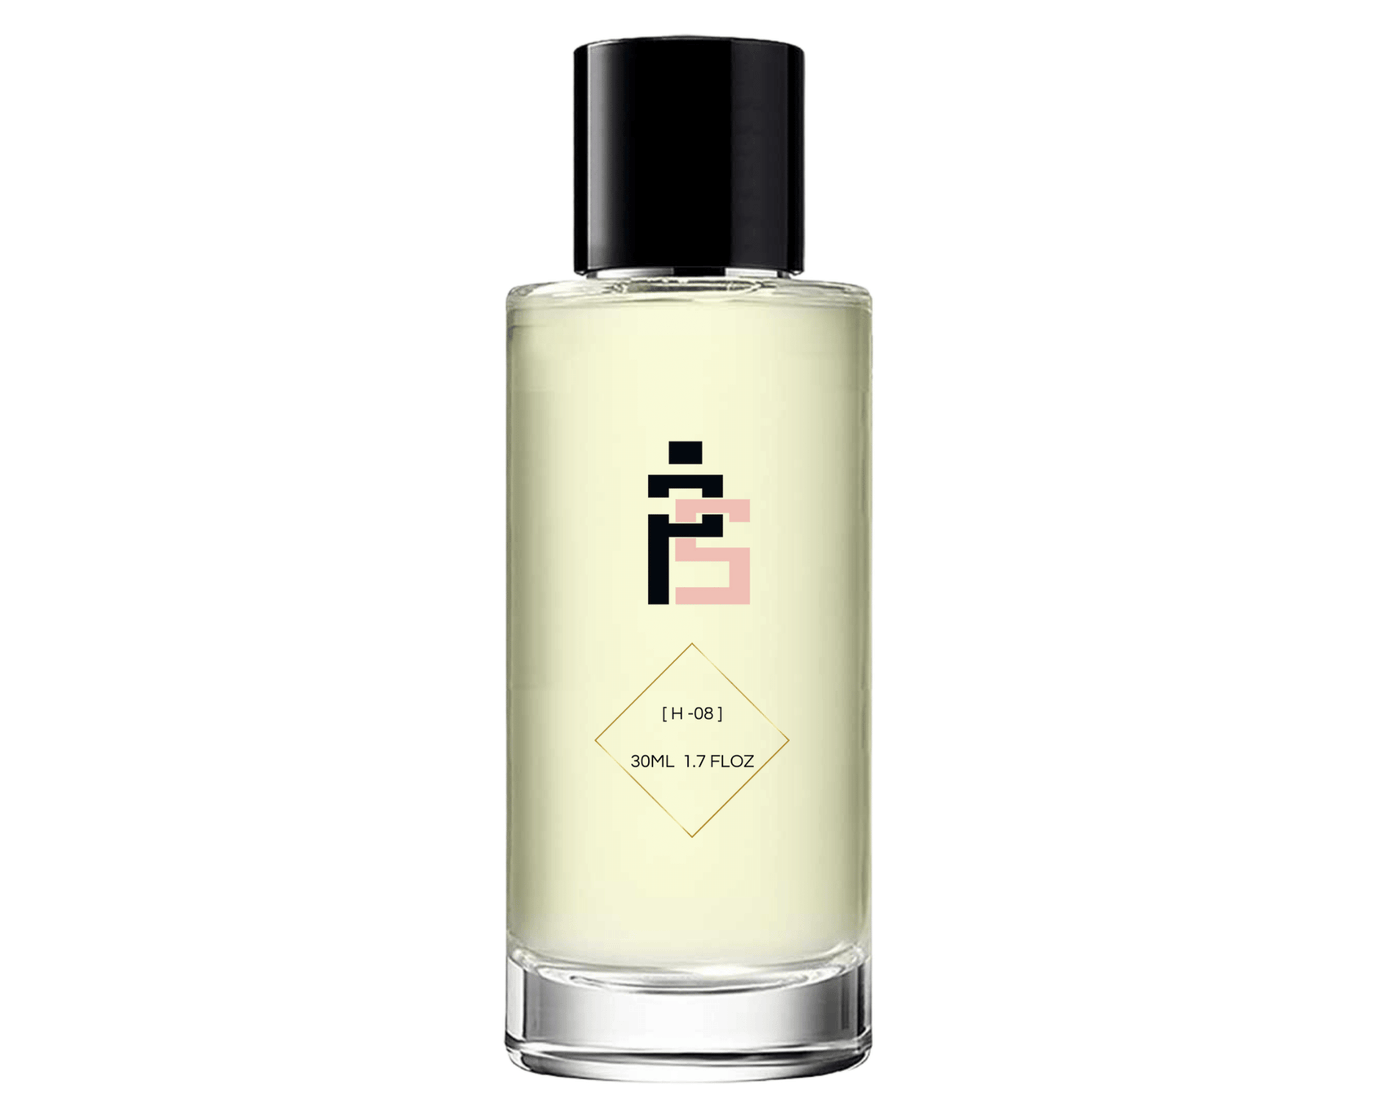 Parfum - H08 | similaire à Green Irish Tweed